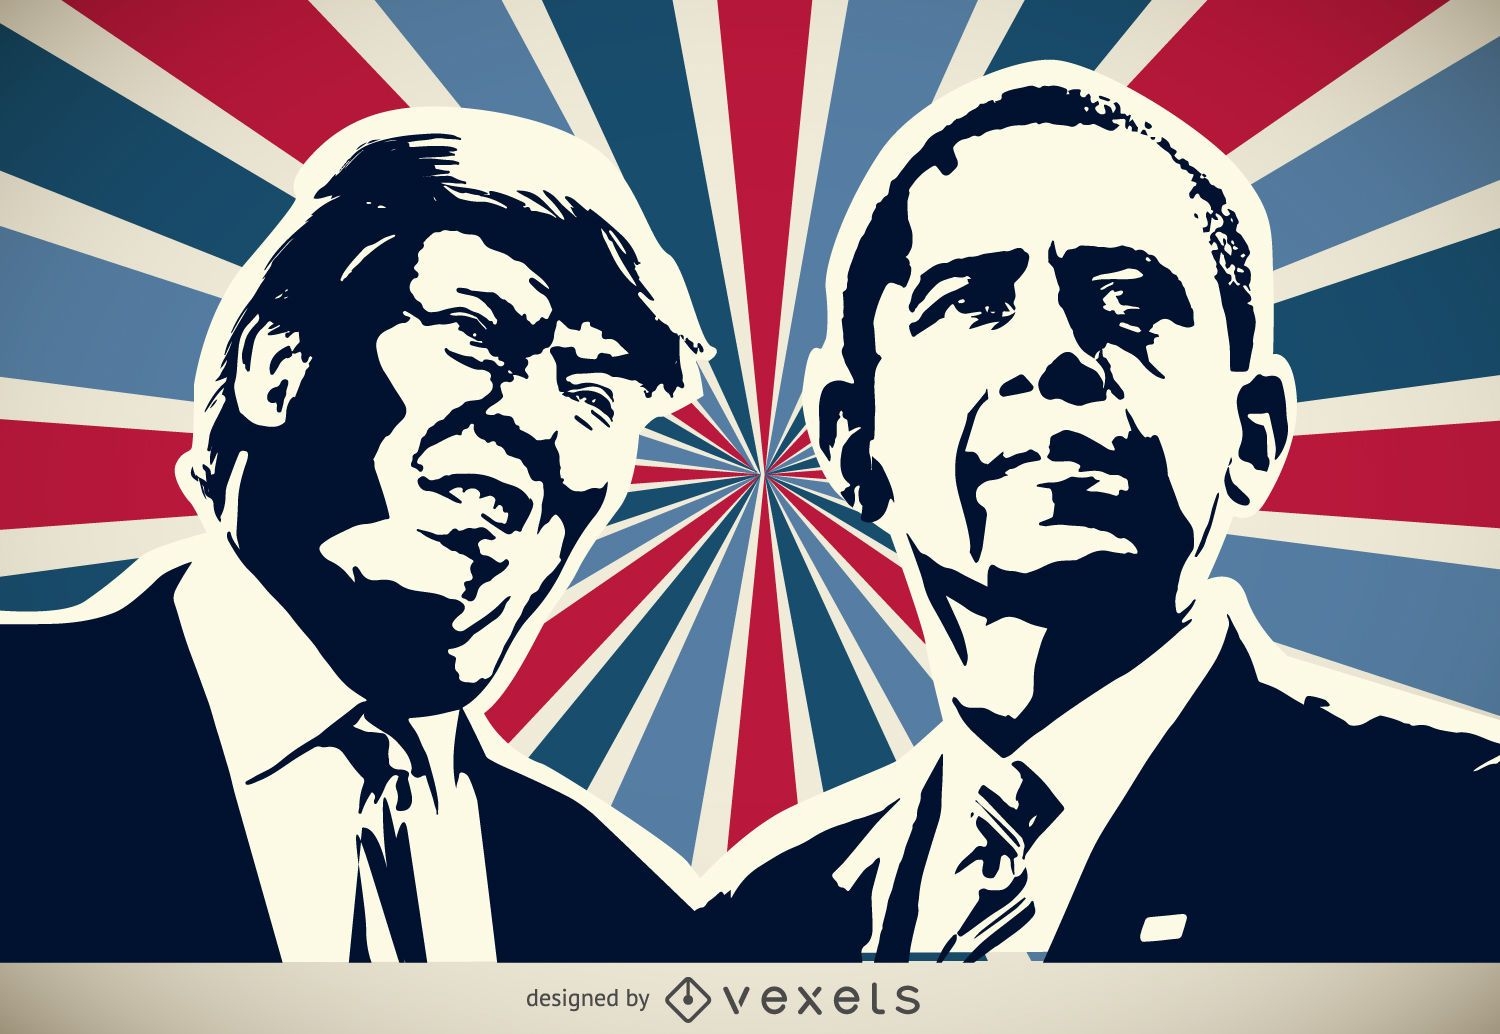 Trump and Obama silhouette